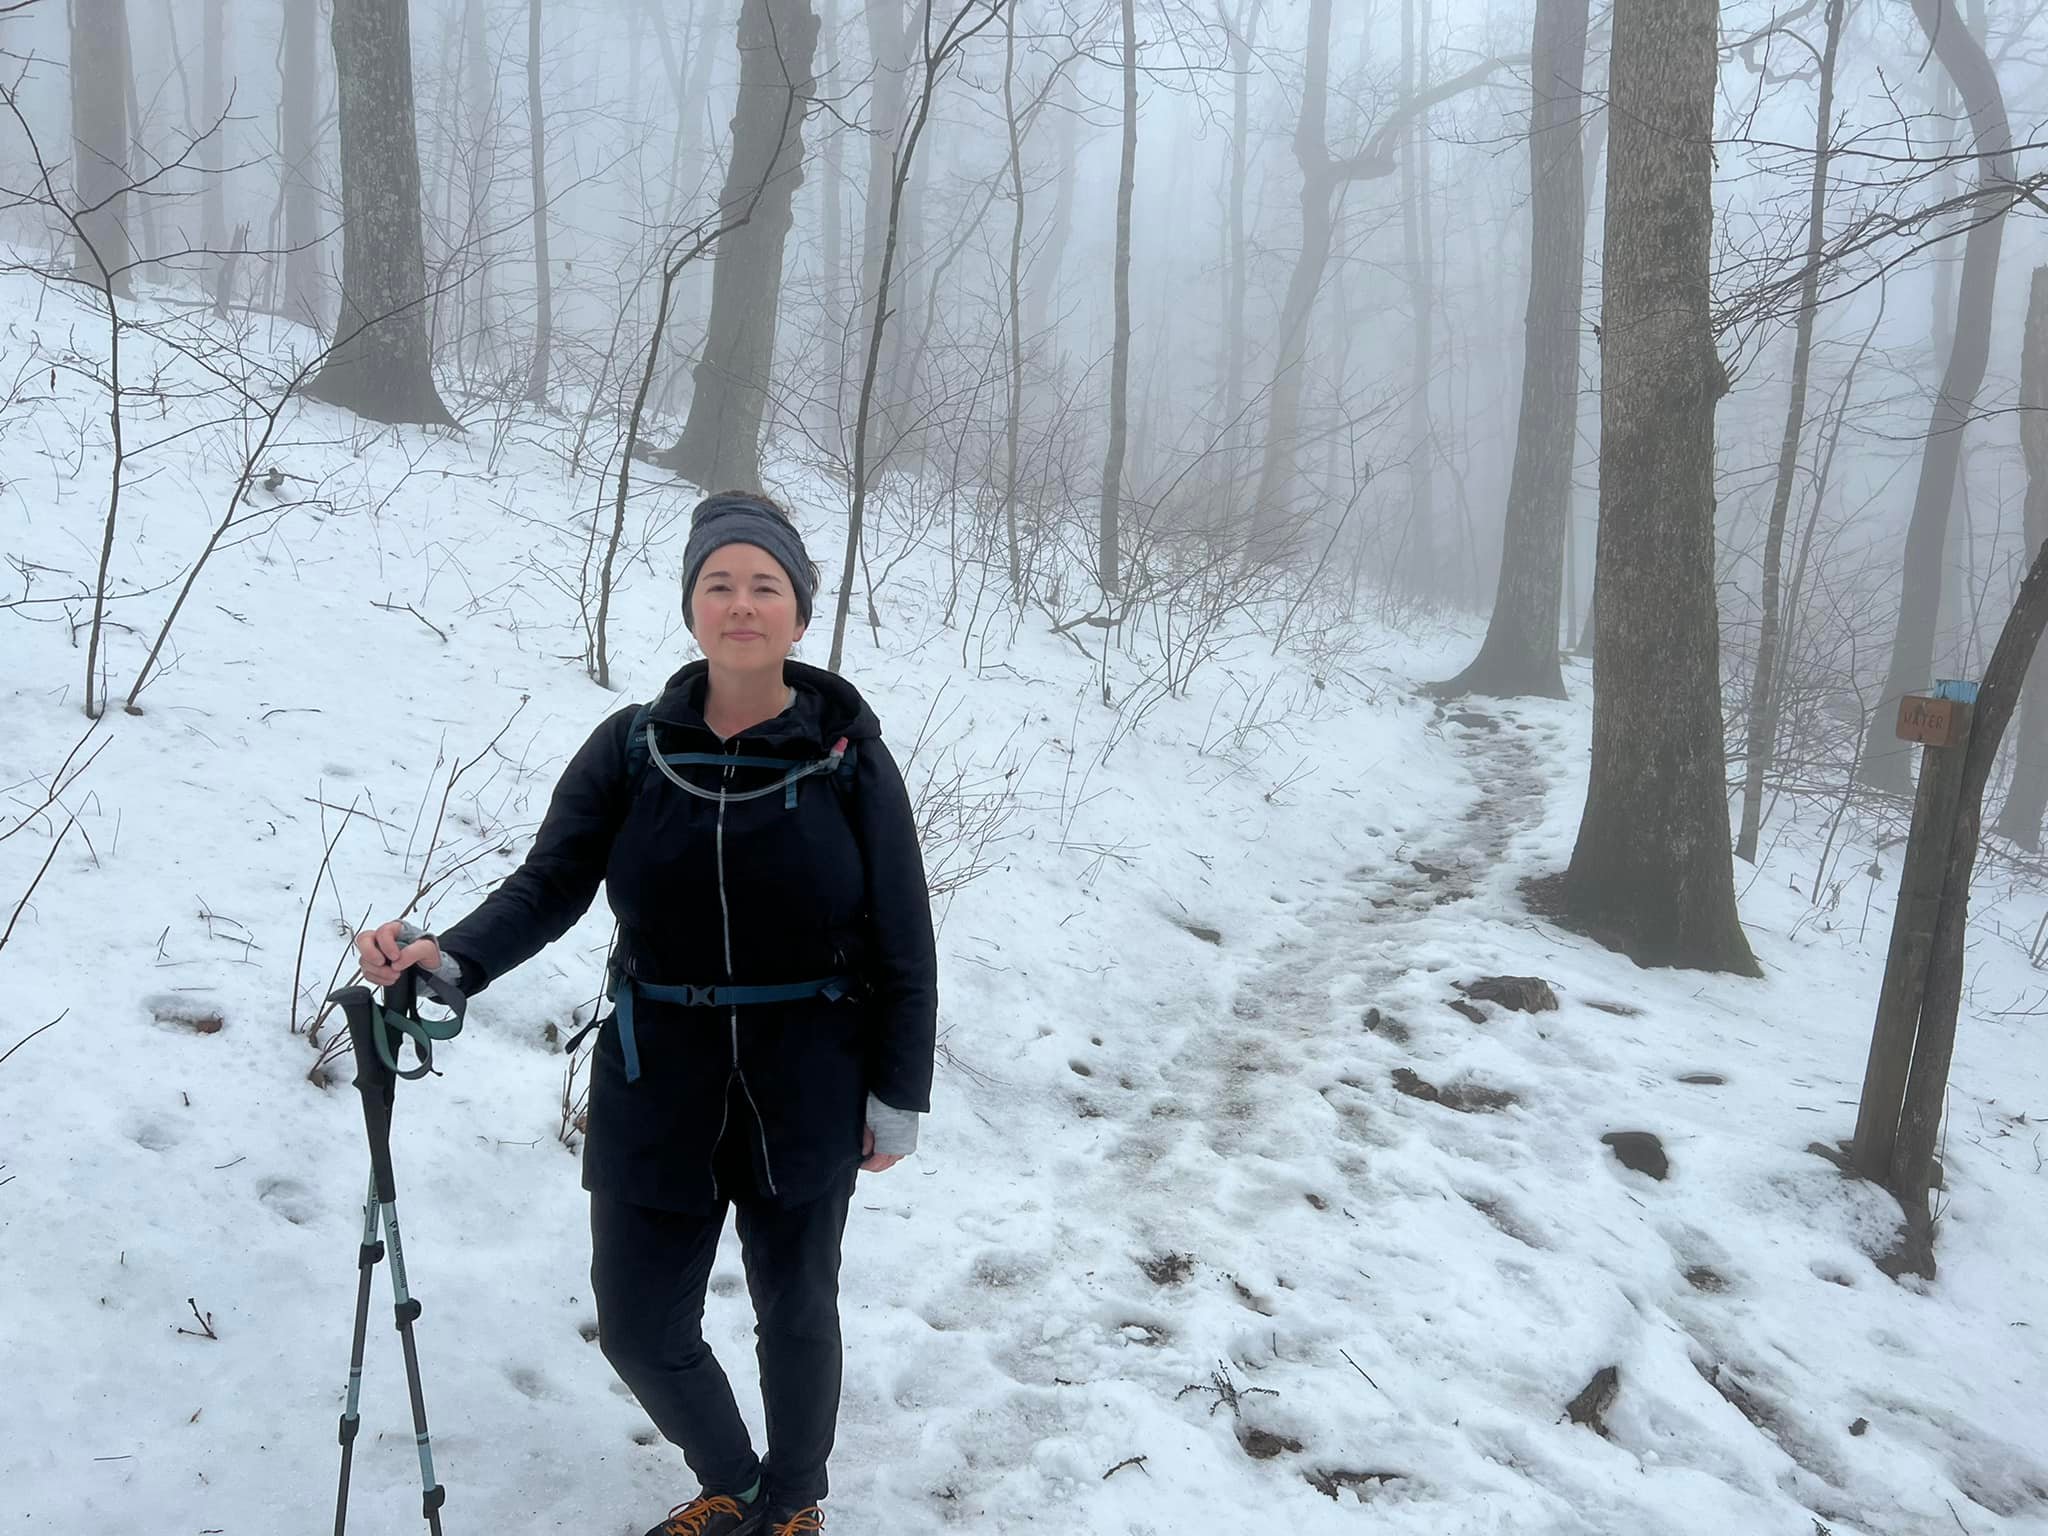 Jill Fogarty hiking a snowy trail at Amicalola Falls